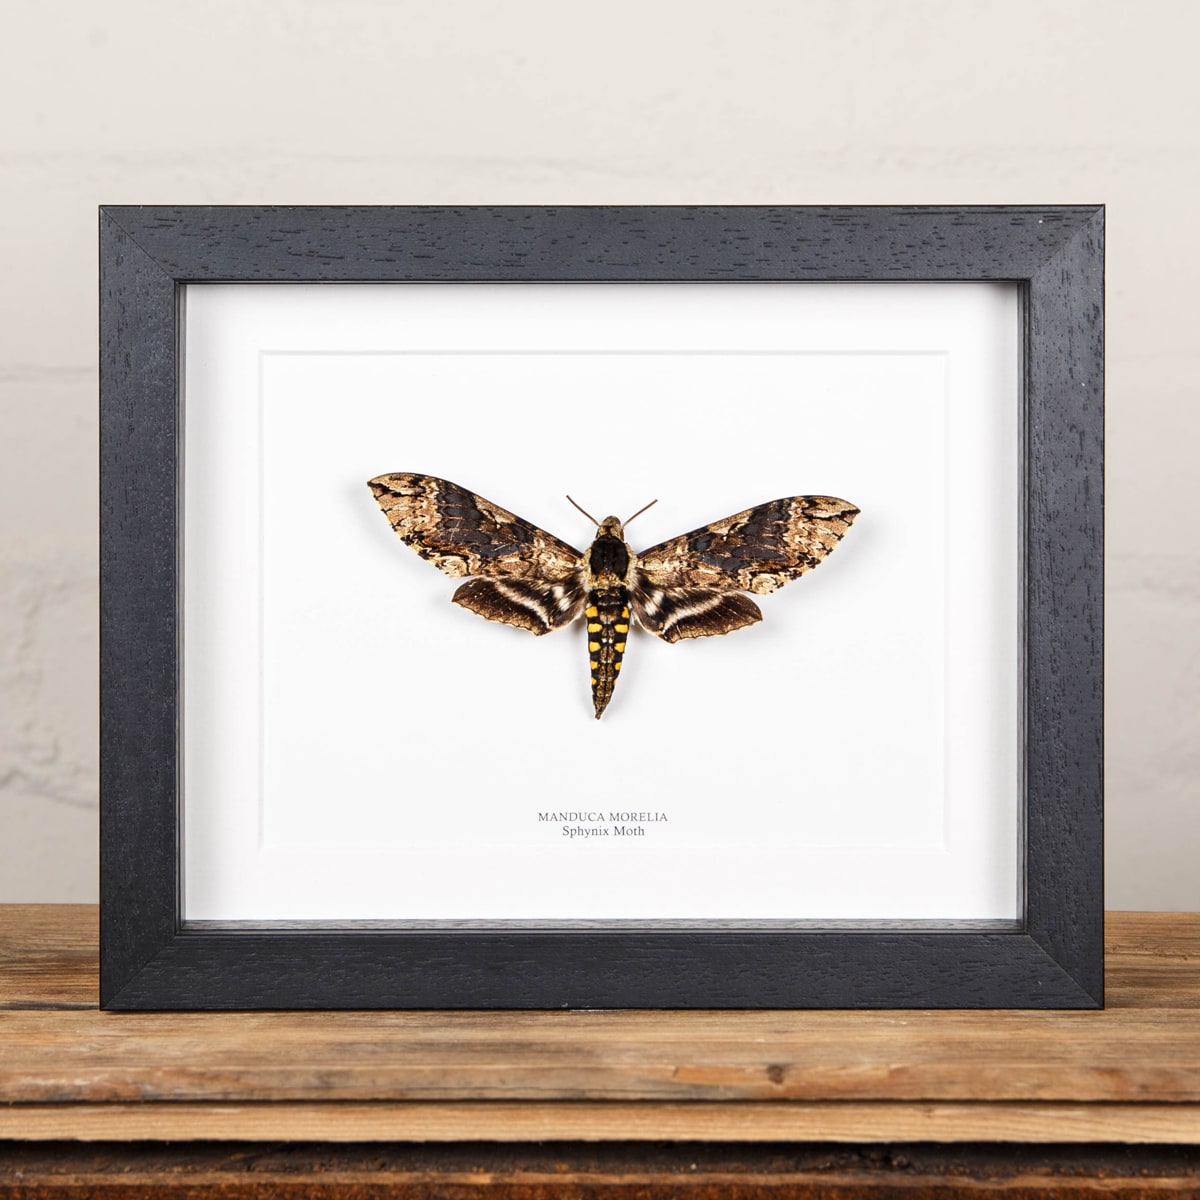 Minibeast Sphynix Moth in Box Frame (Manduca morelia)